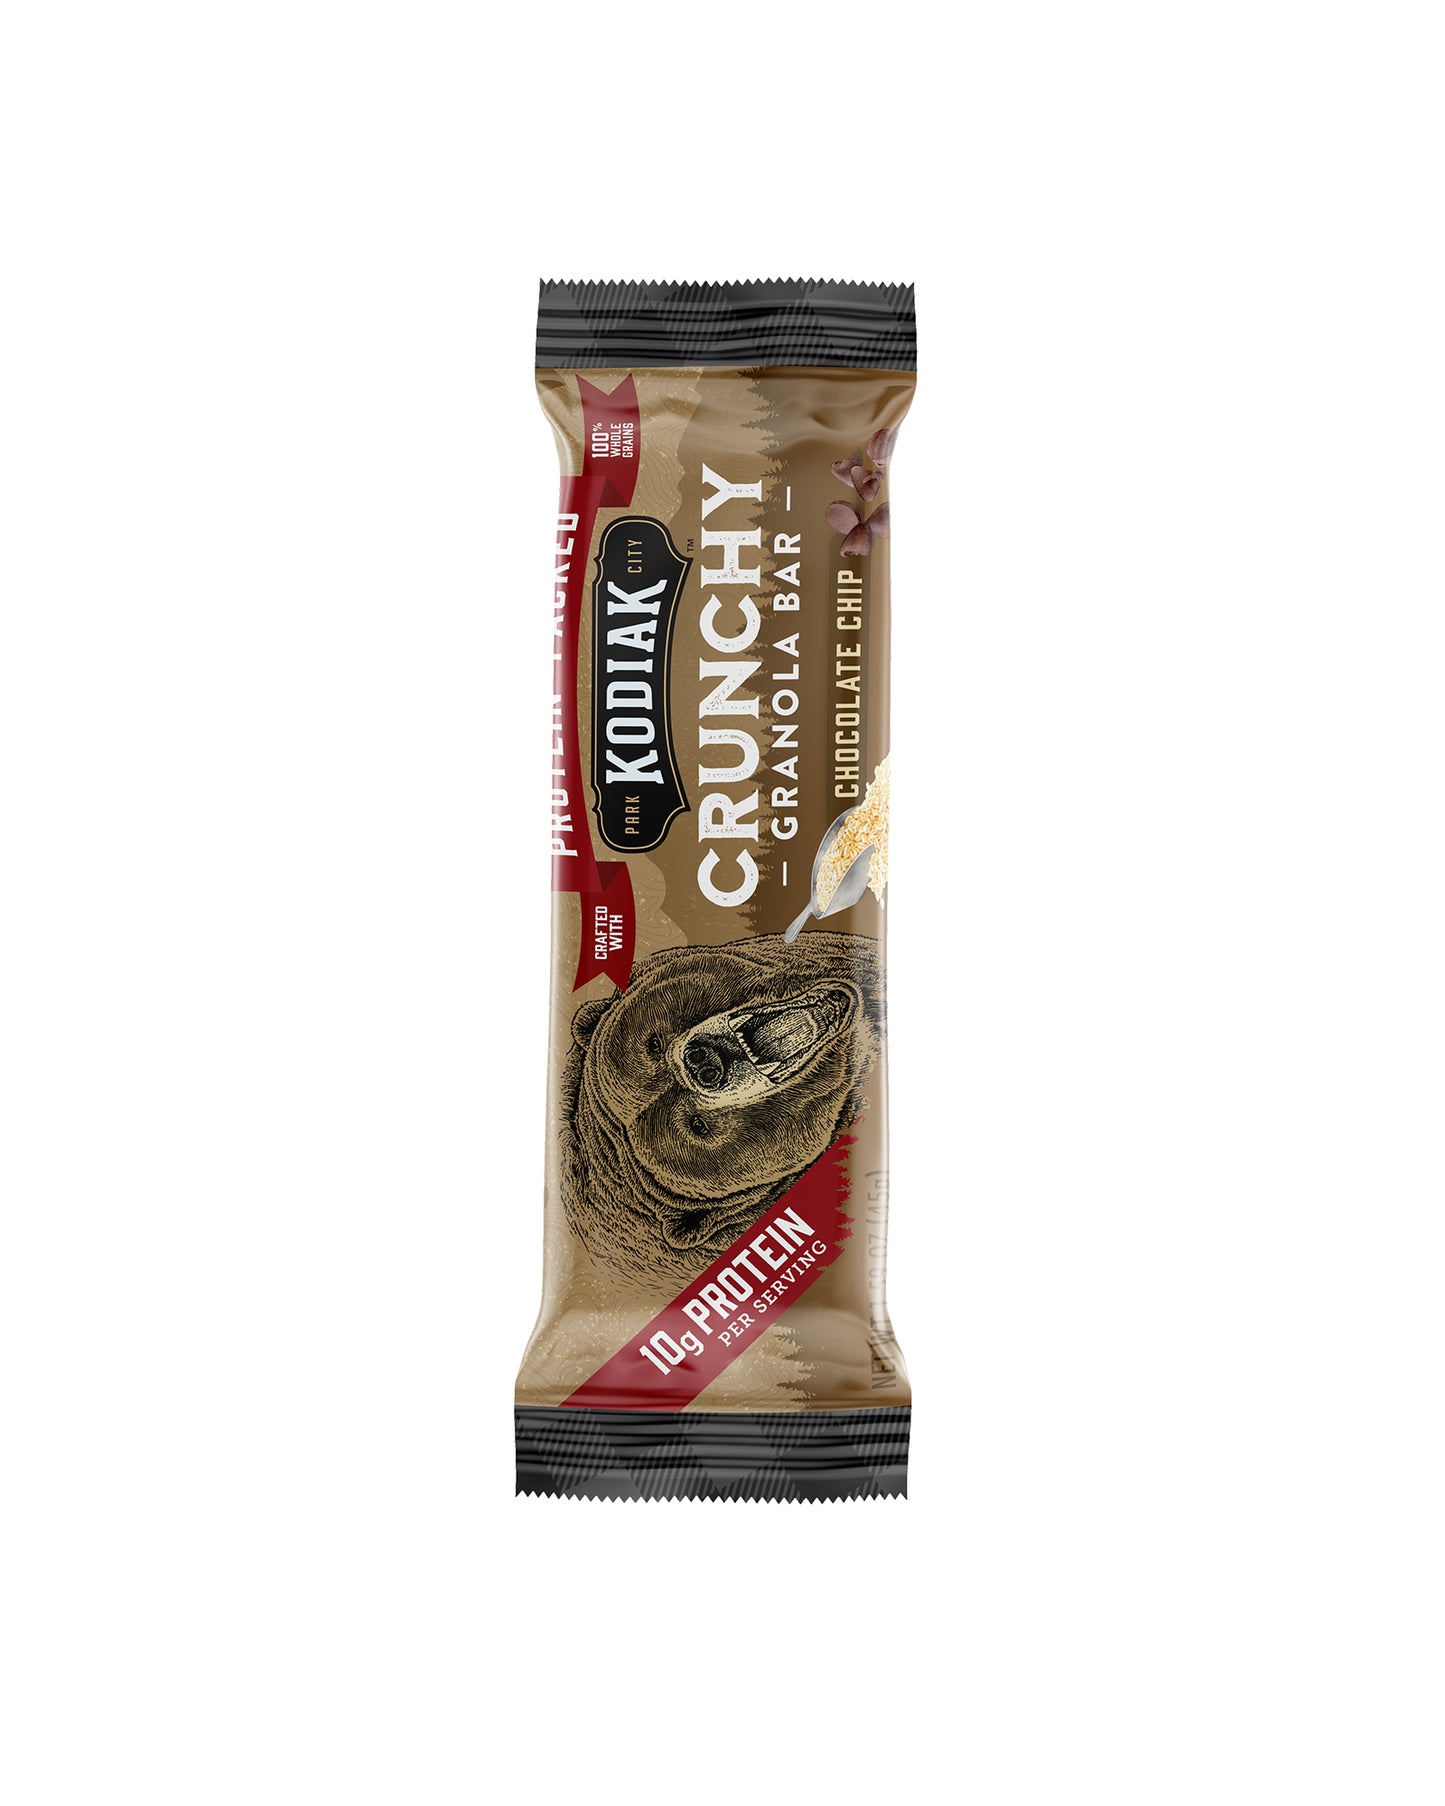 Chocolate Chip Crunchy Granola Bars - Box of 6